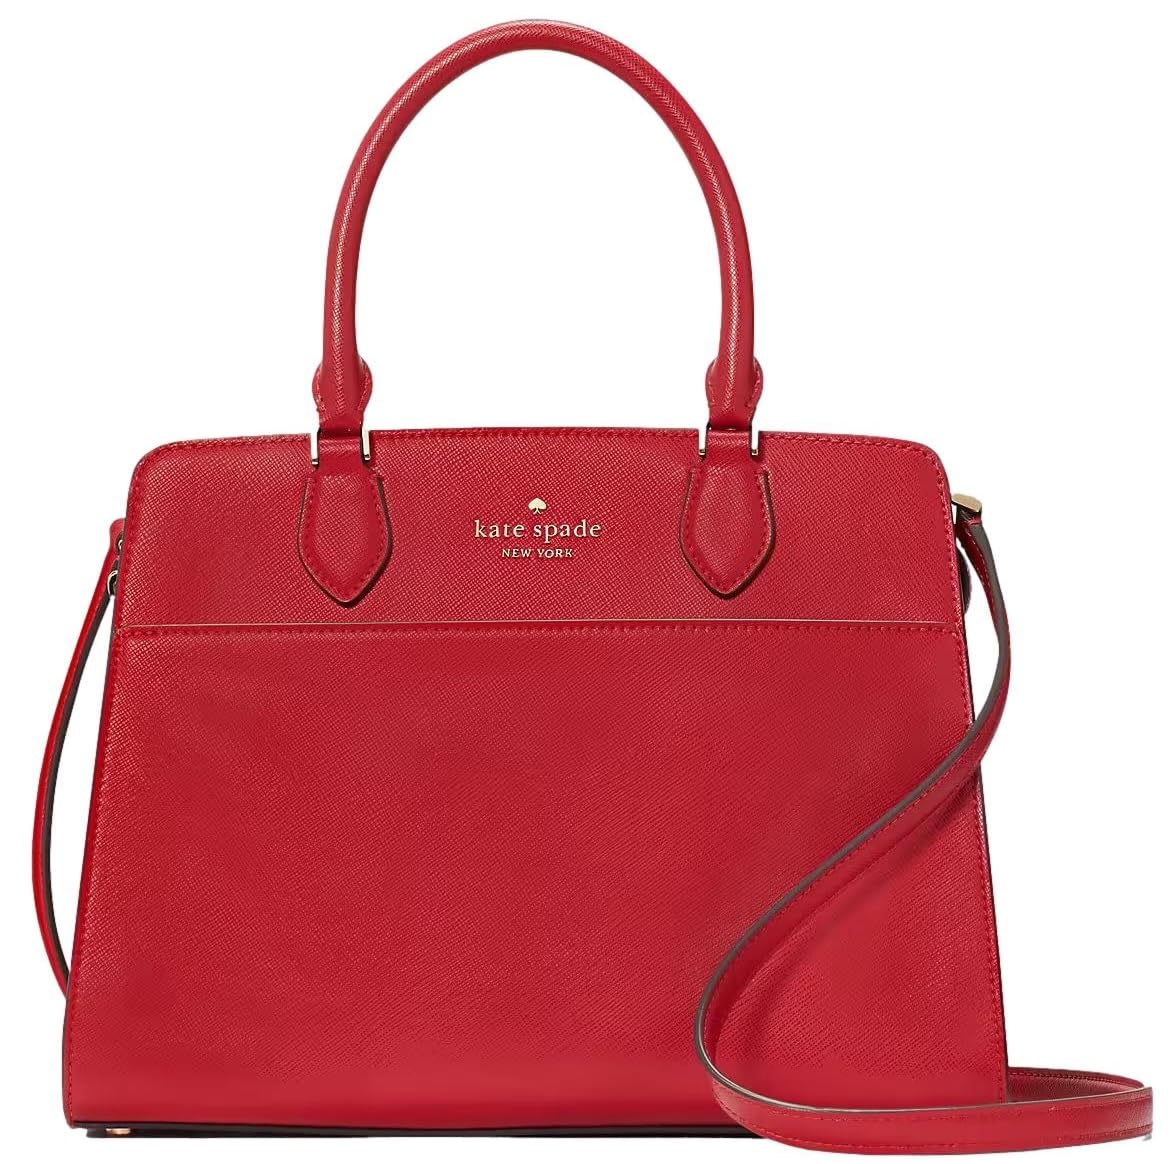 Kate Spade New York Madison Medium Satchel Saffiano Leather Handbag